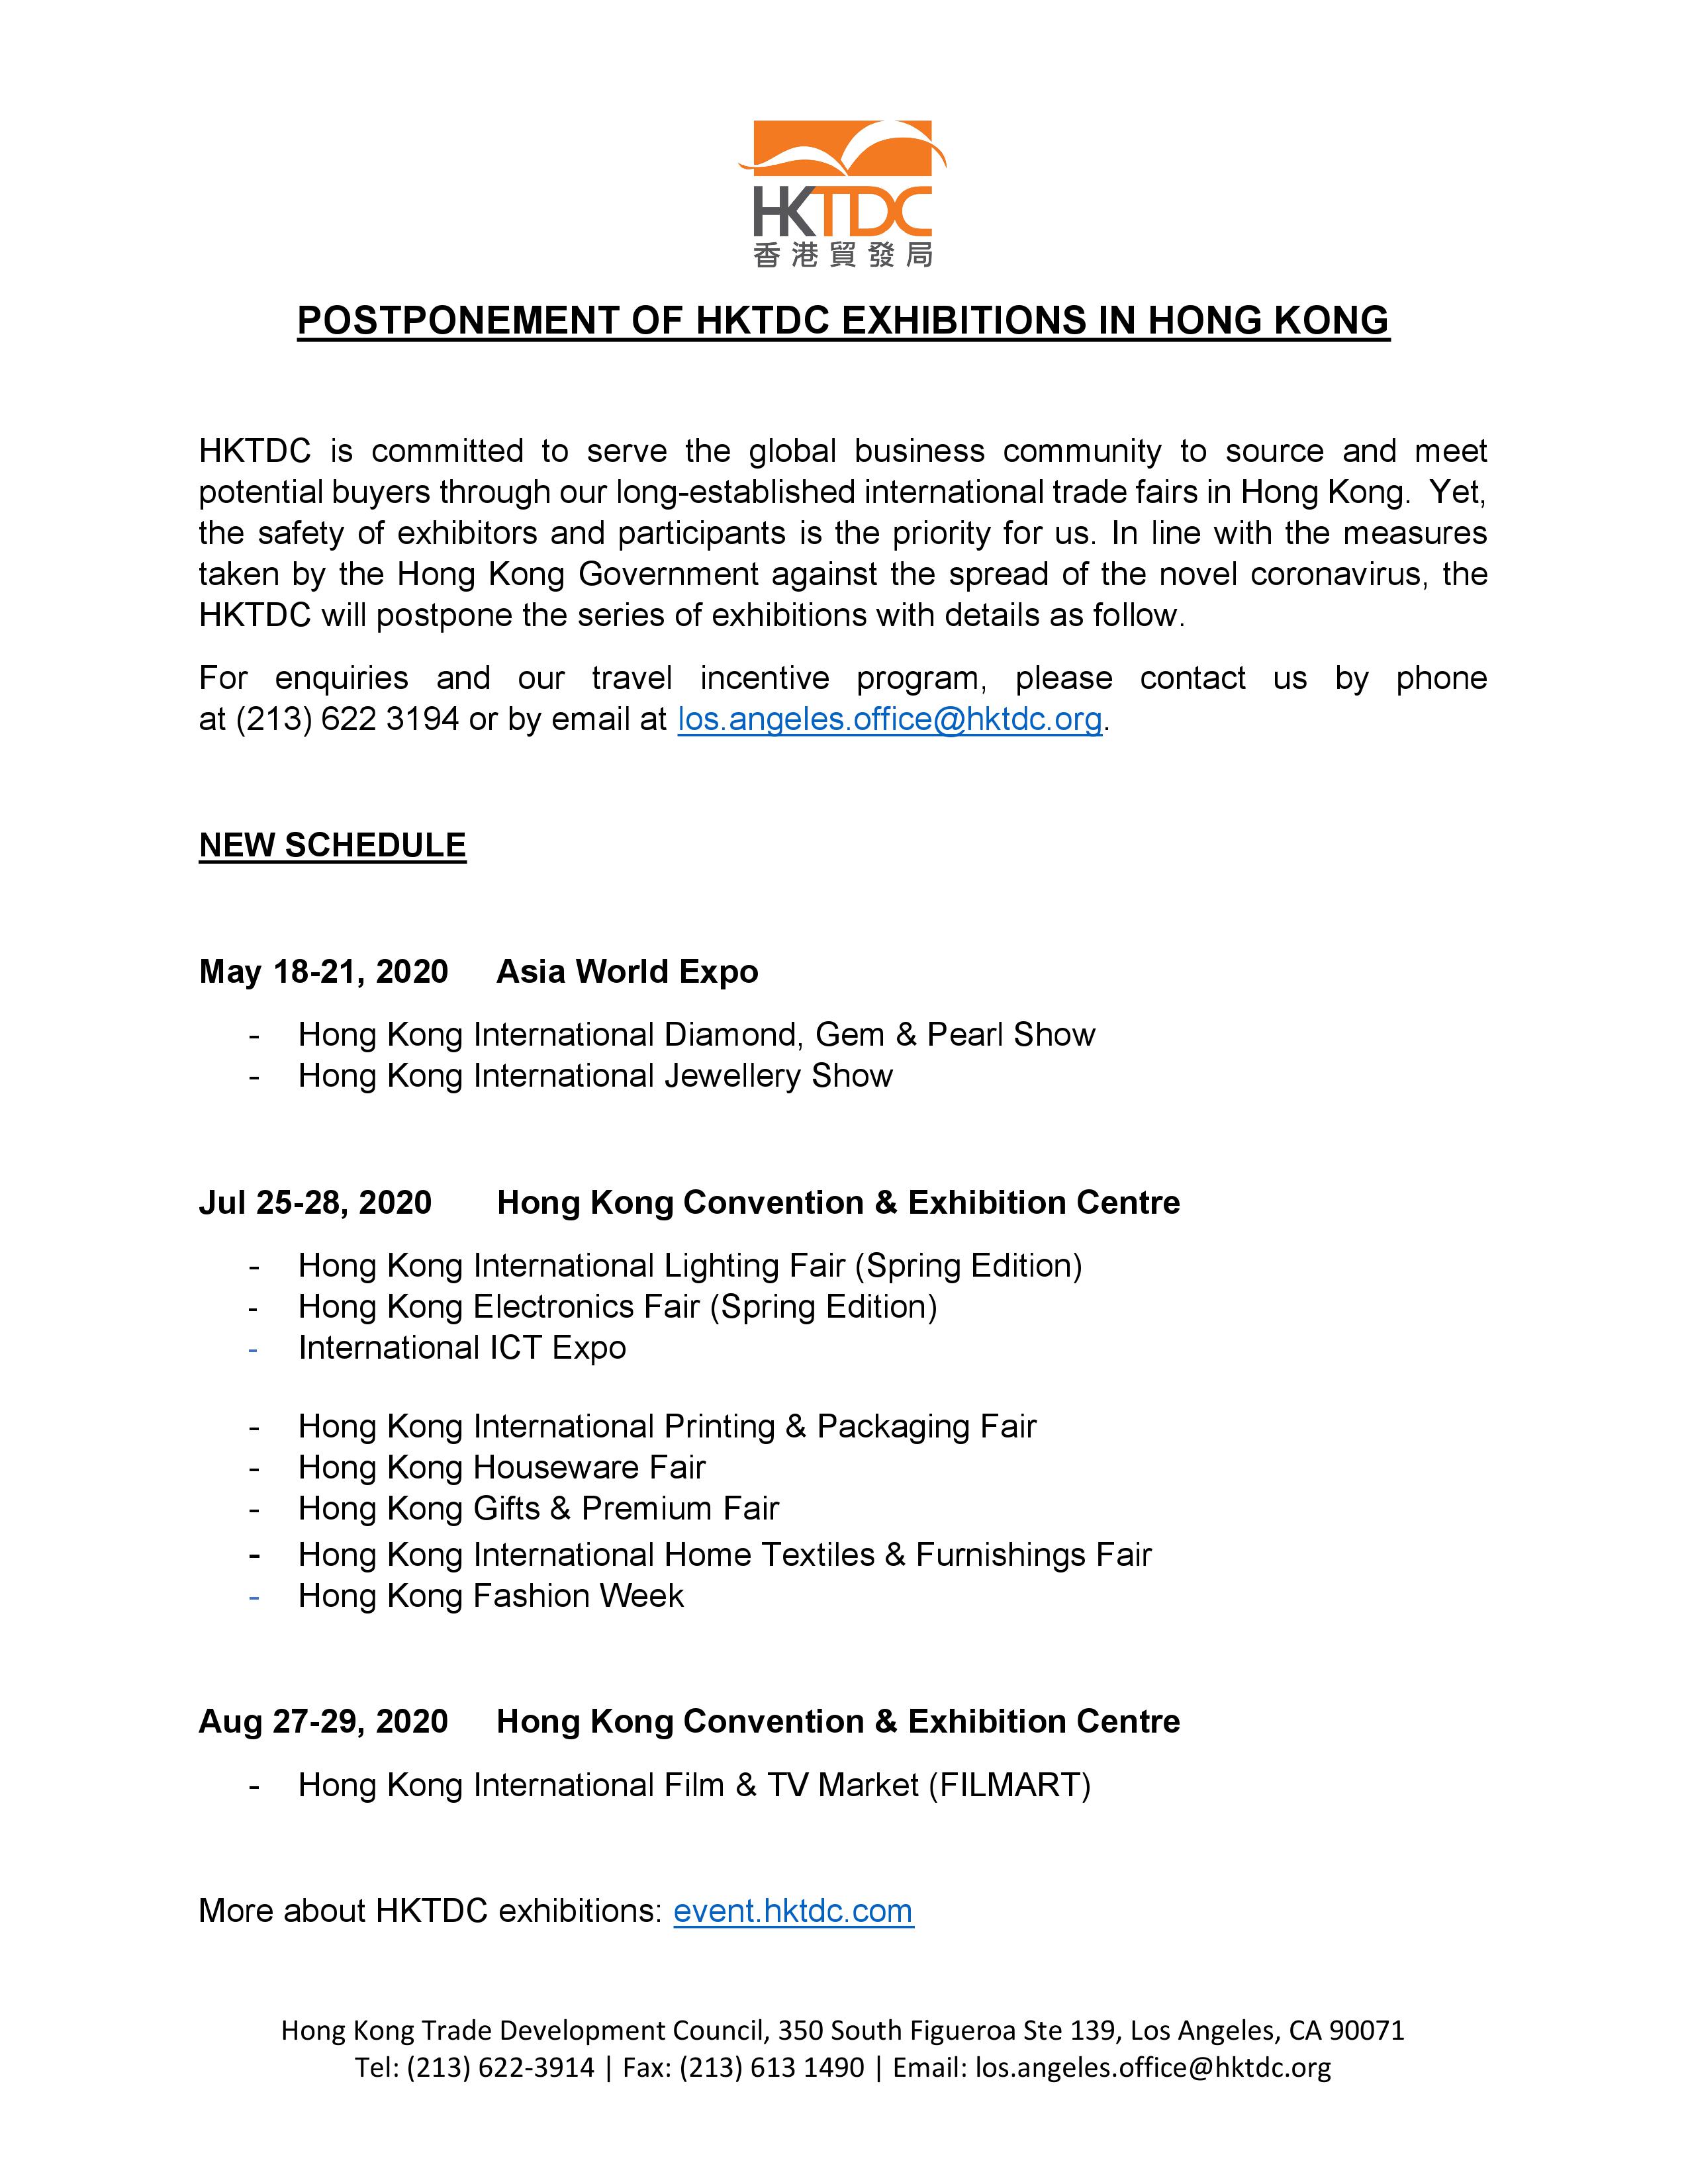 Postponement of HKTDC Exhibitions in Hong Kong